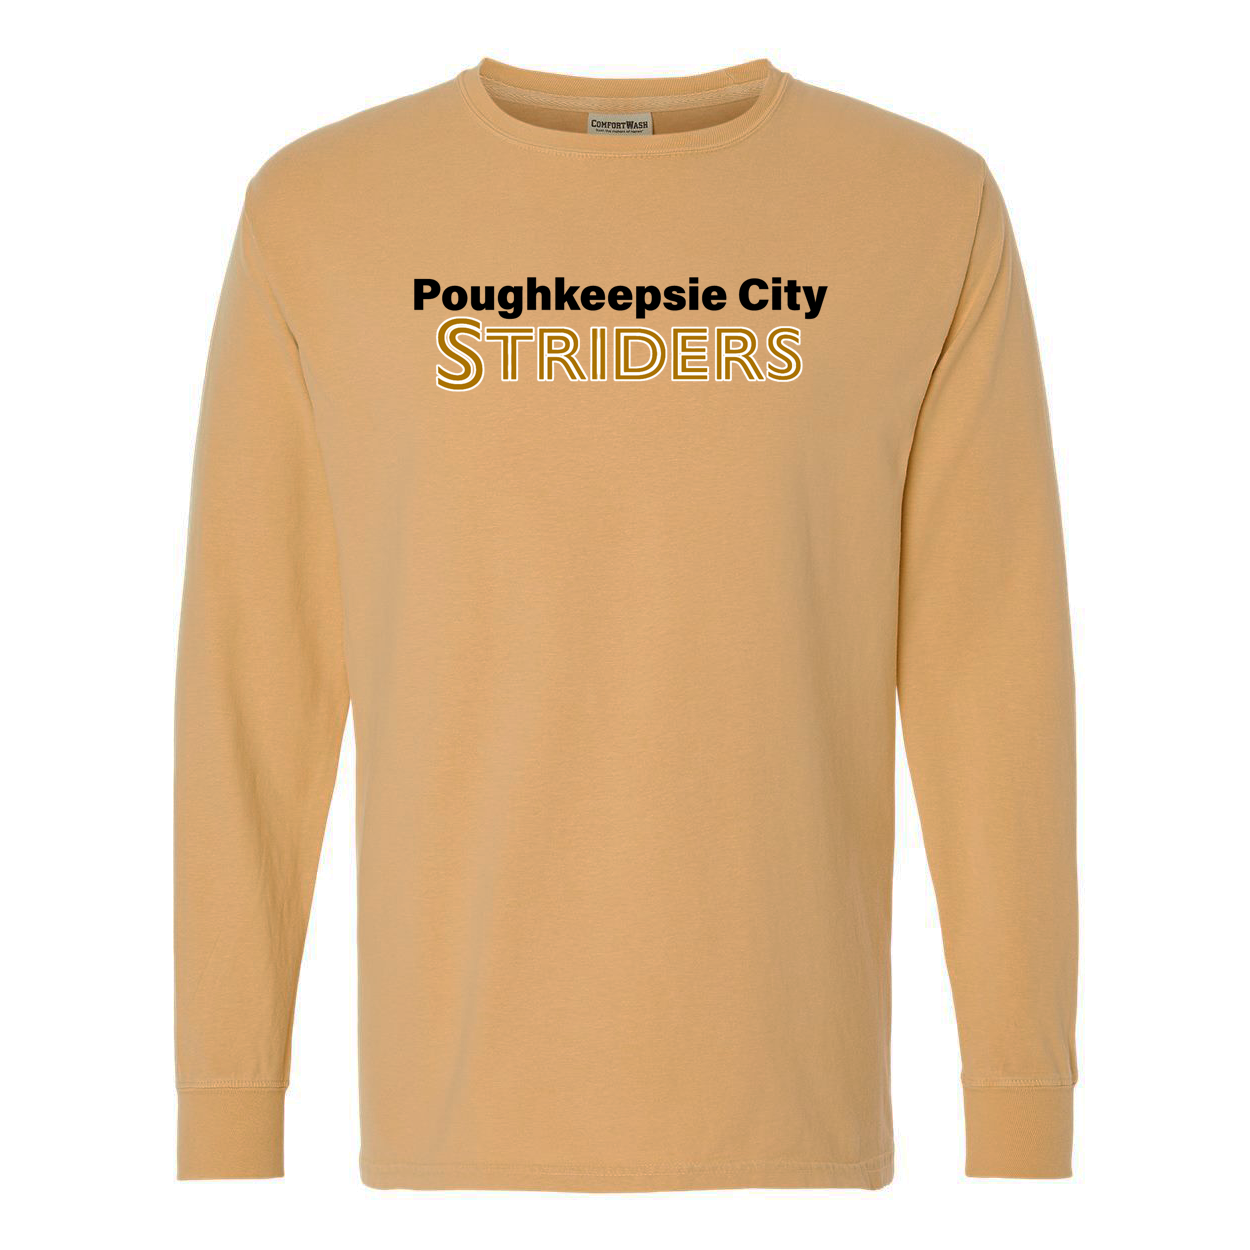 Poughkeepsie City Striders